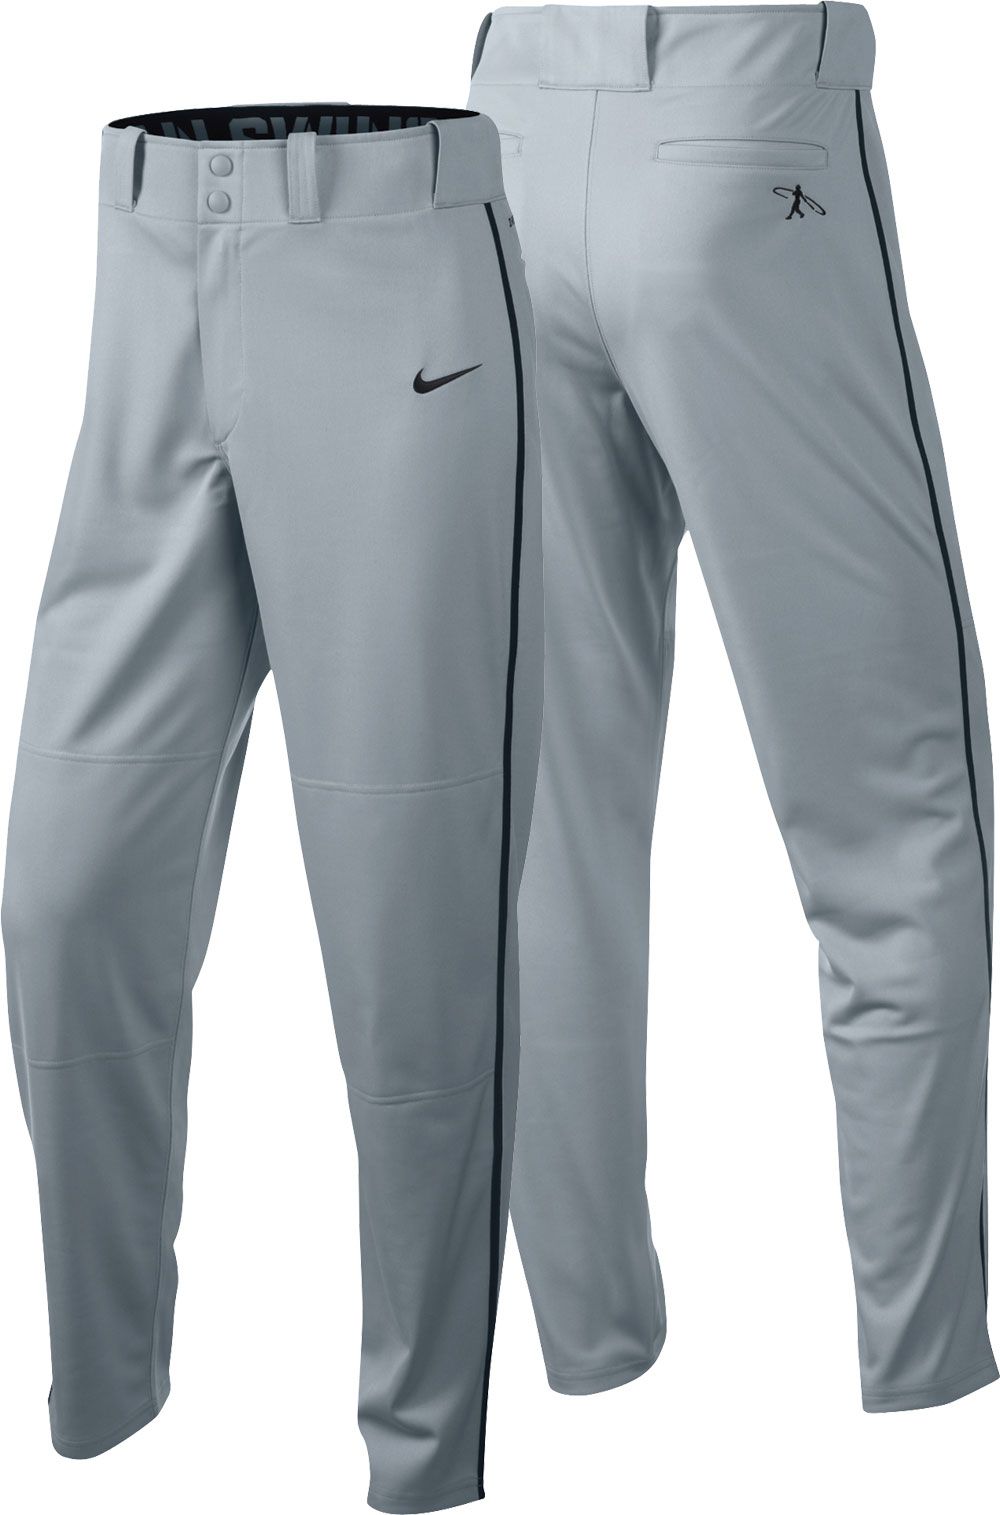 Nike / Men's Swingman Dri-FIT Piped Baseball Pants